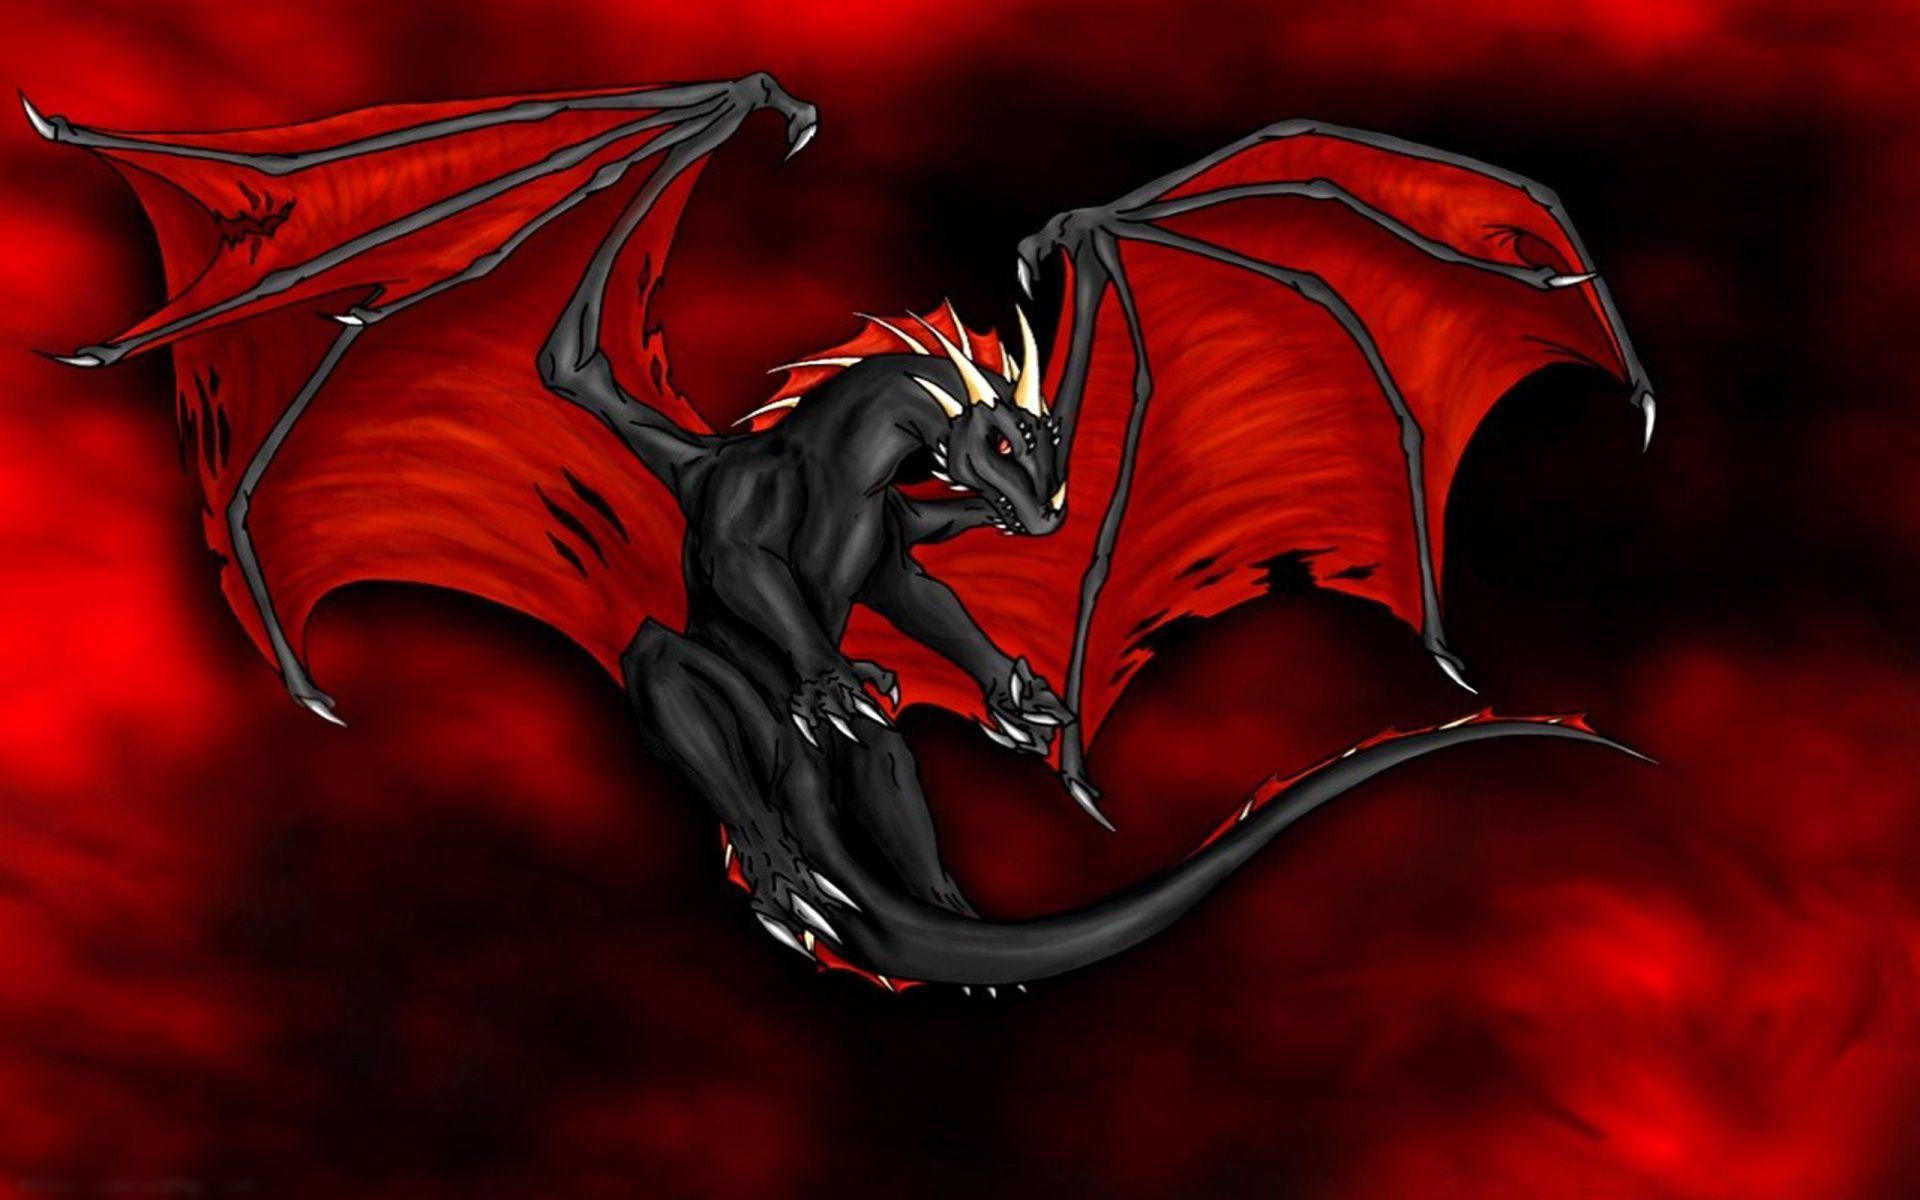 Red Dragon wallpaper. Red Dragon